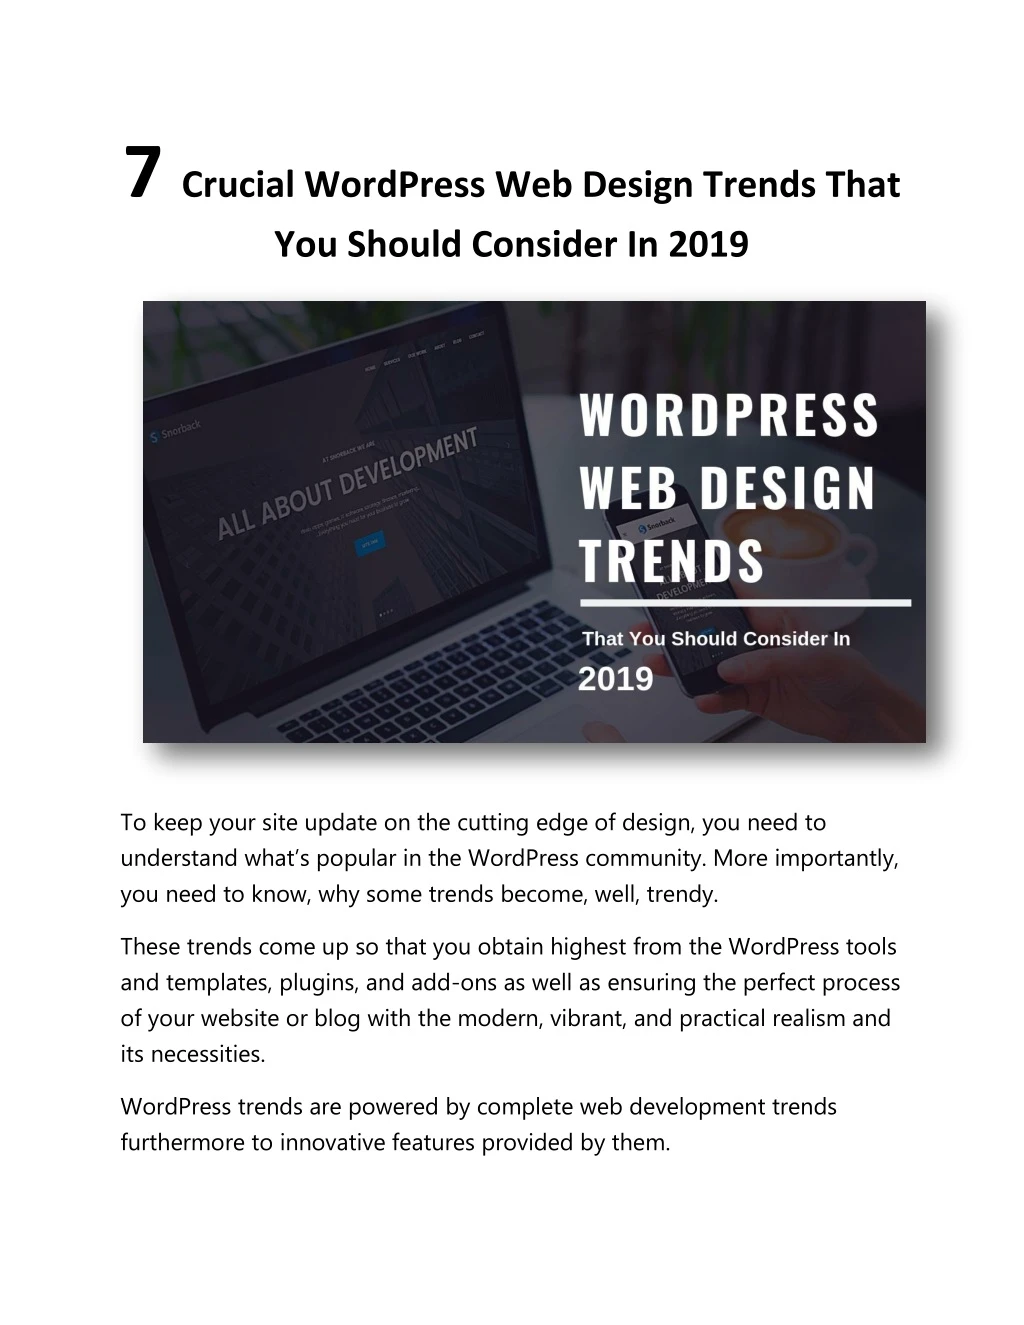 7 crucial wordpress web design trends that